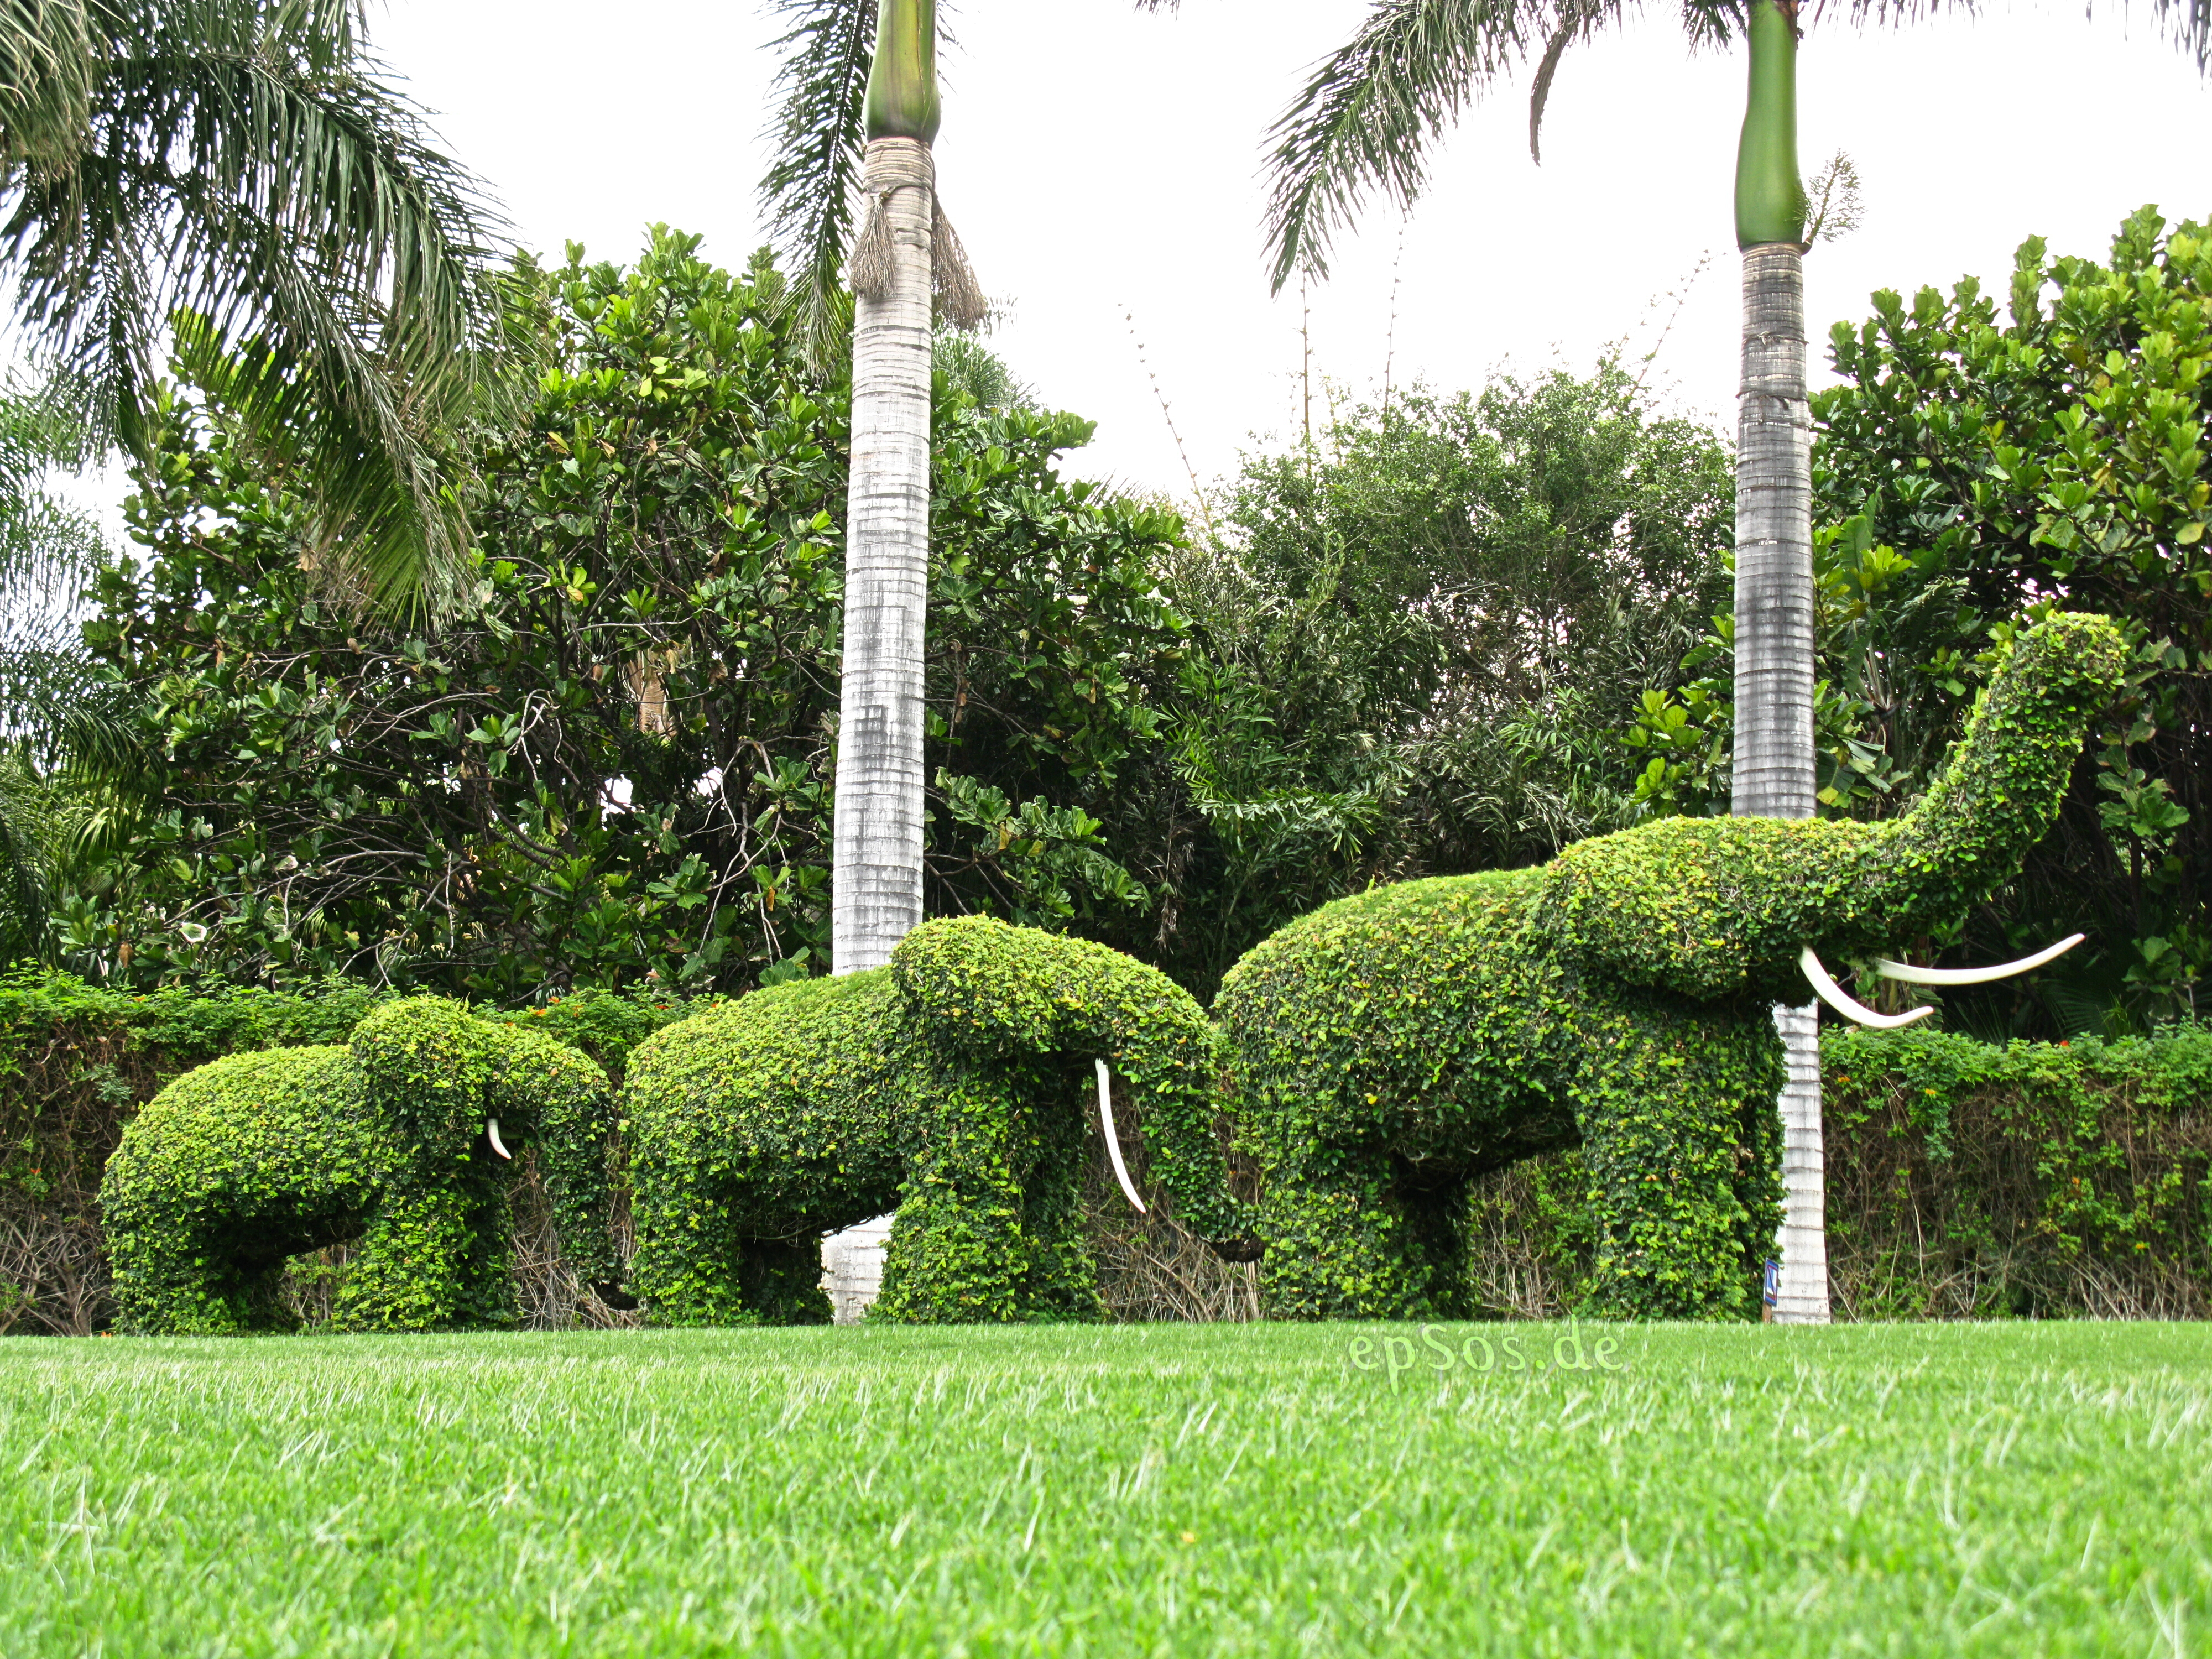 File:Green Elephants Garden Sculptures.jpg - Wikimedia Commons